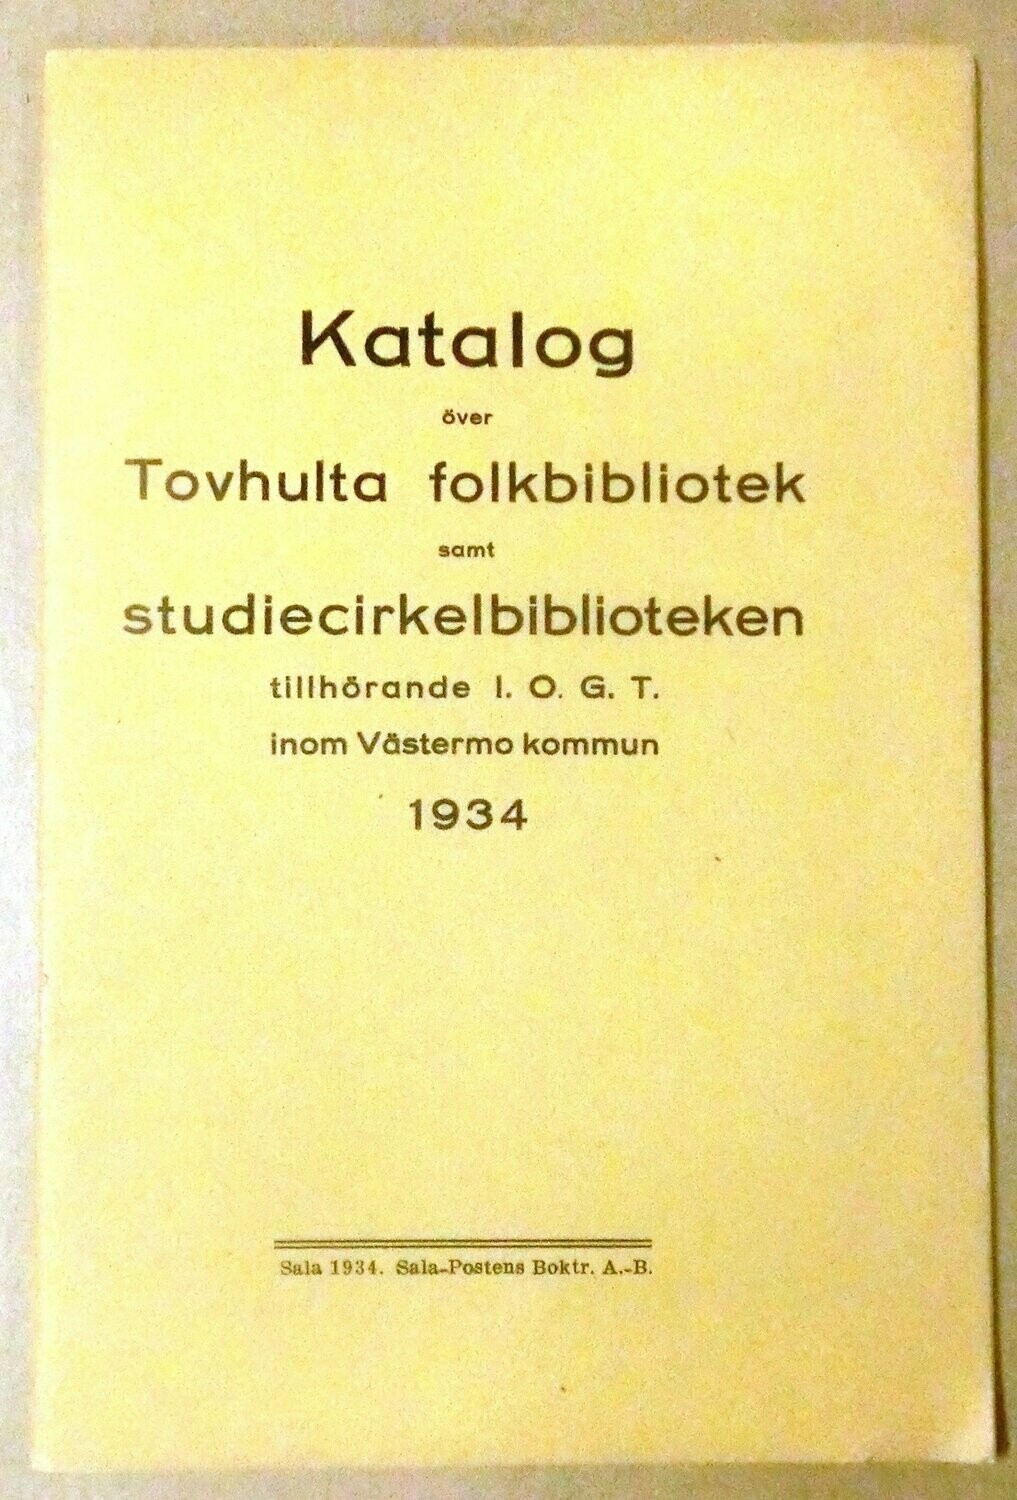 Katalog över Tovhulta folkbibliotek samt studiecirkelbiblioteken